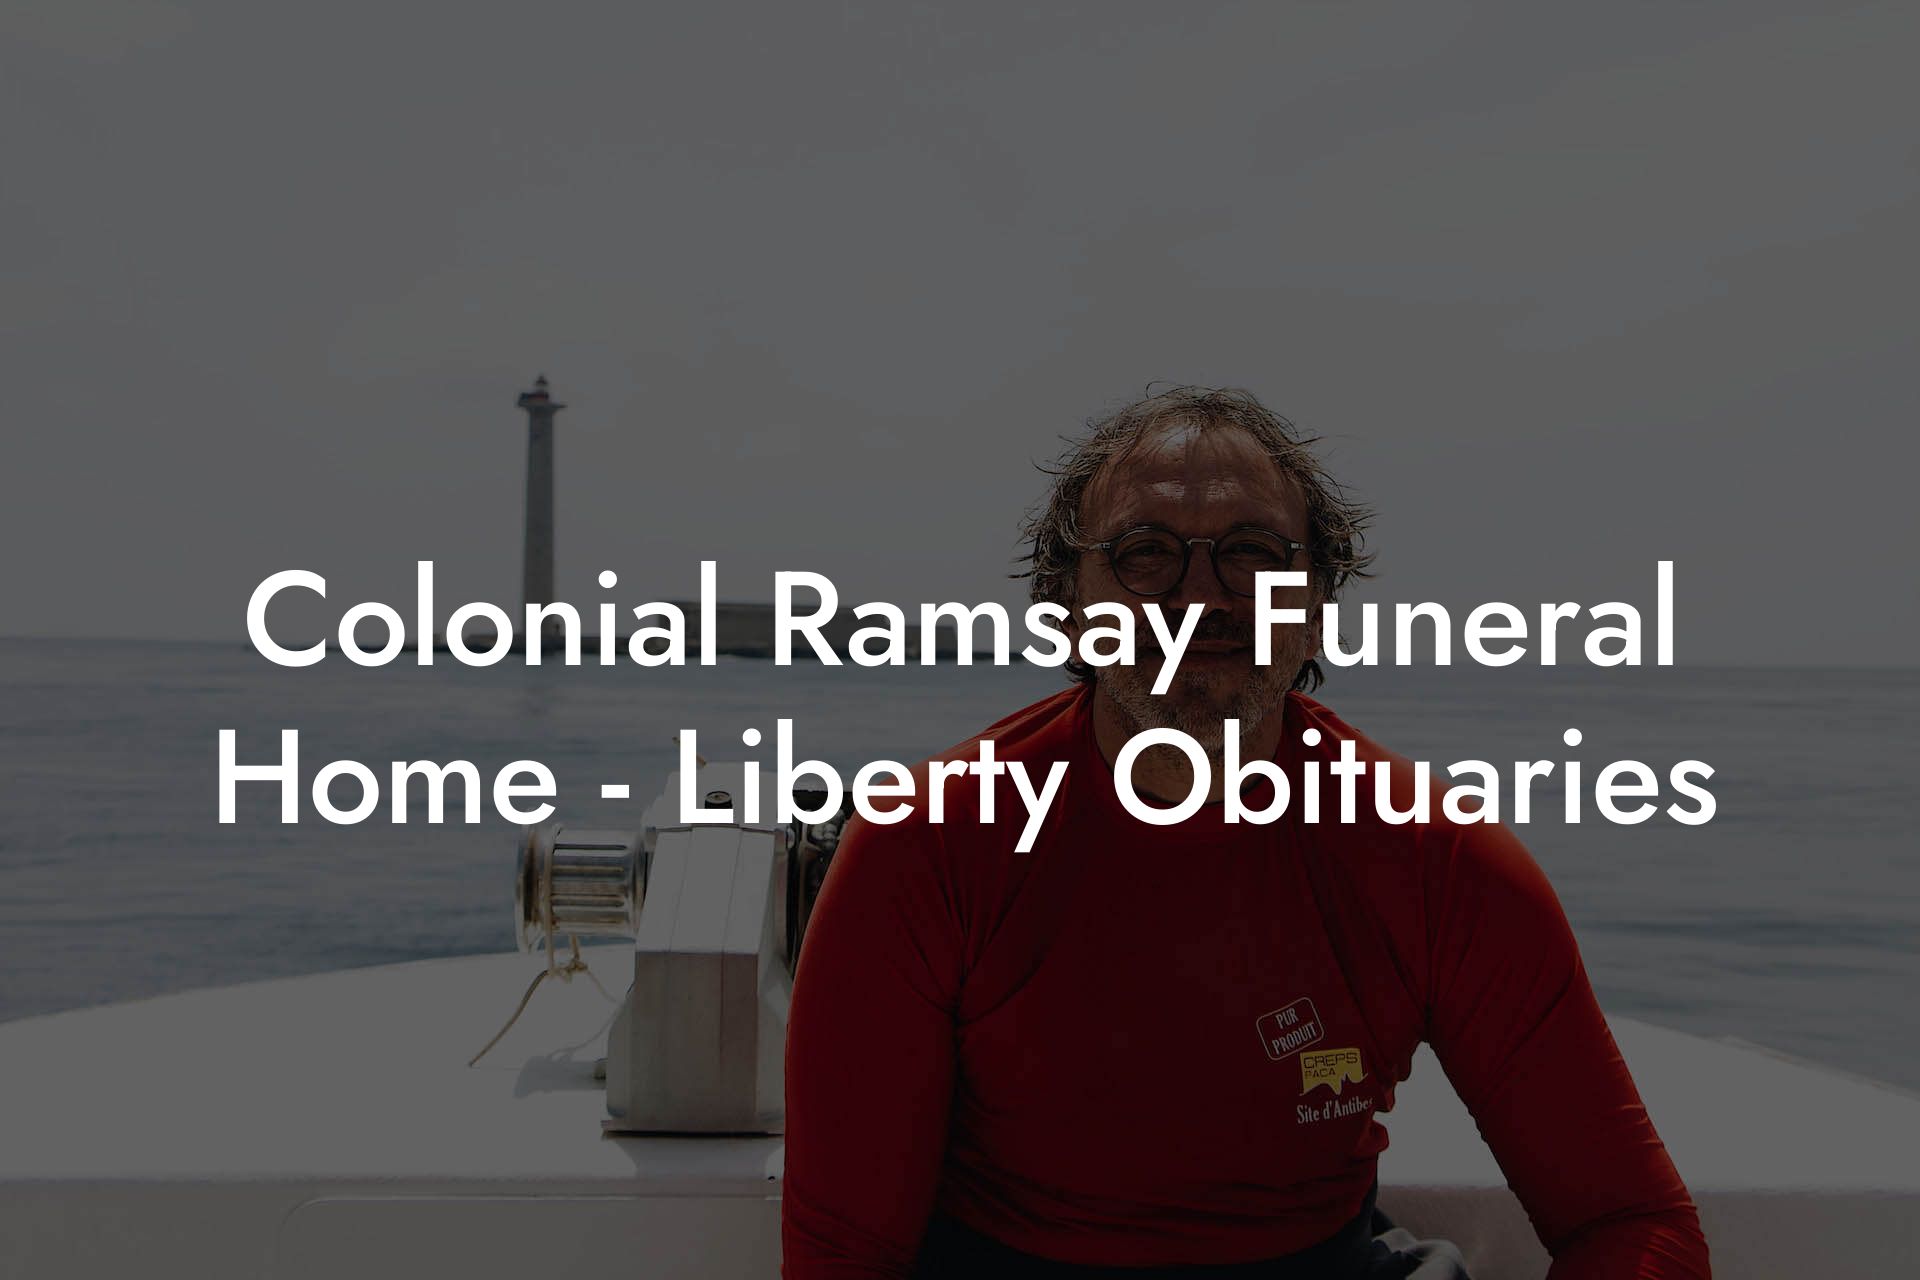 Colonial Ramsay Funeral Home - Liberty Obituaries